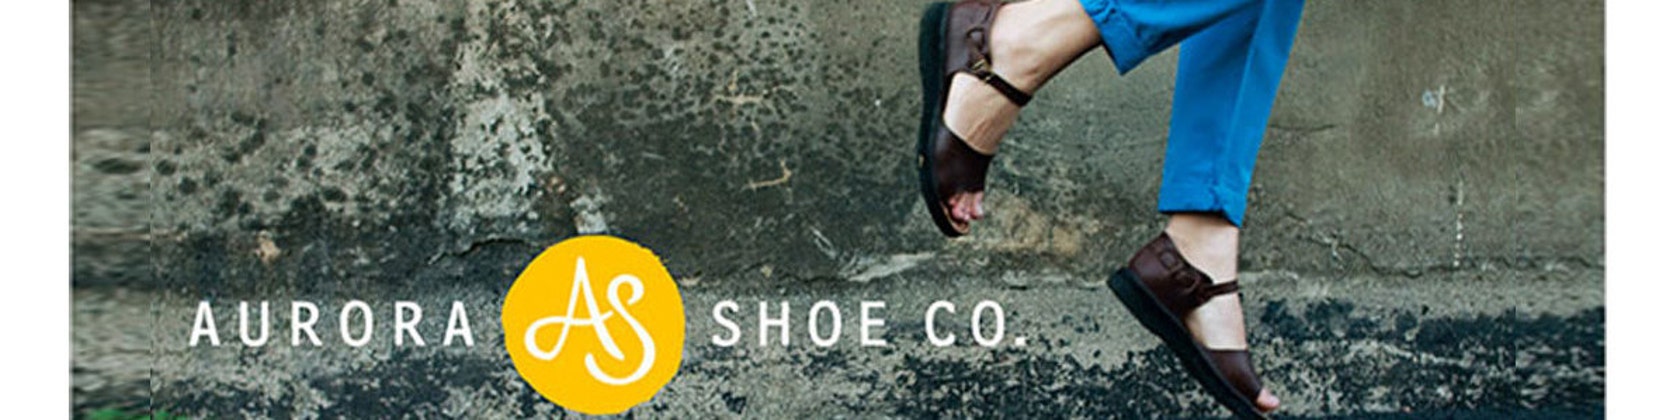 the shoe co